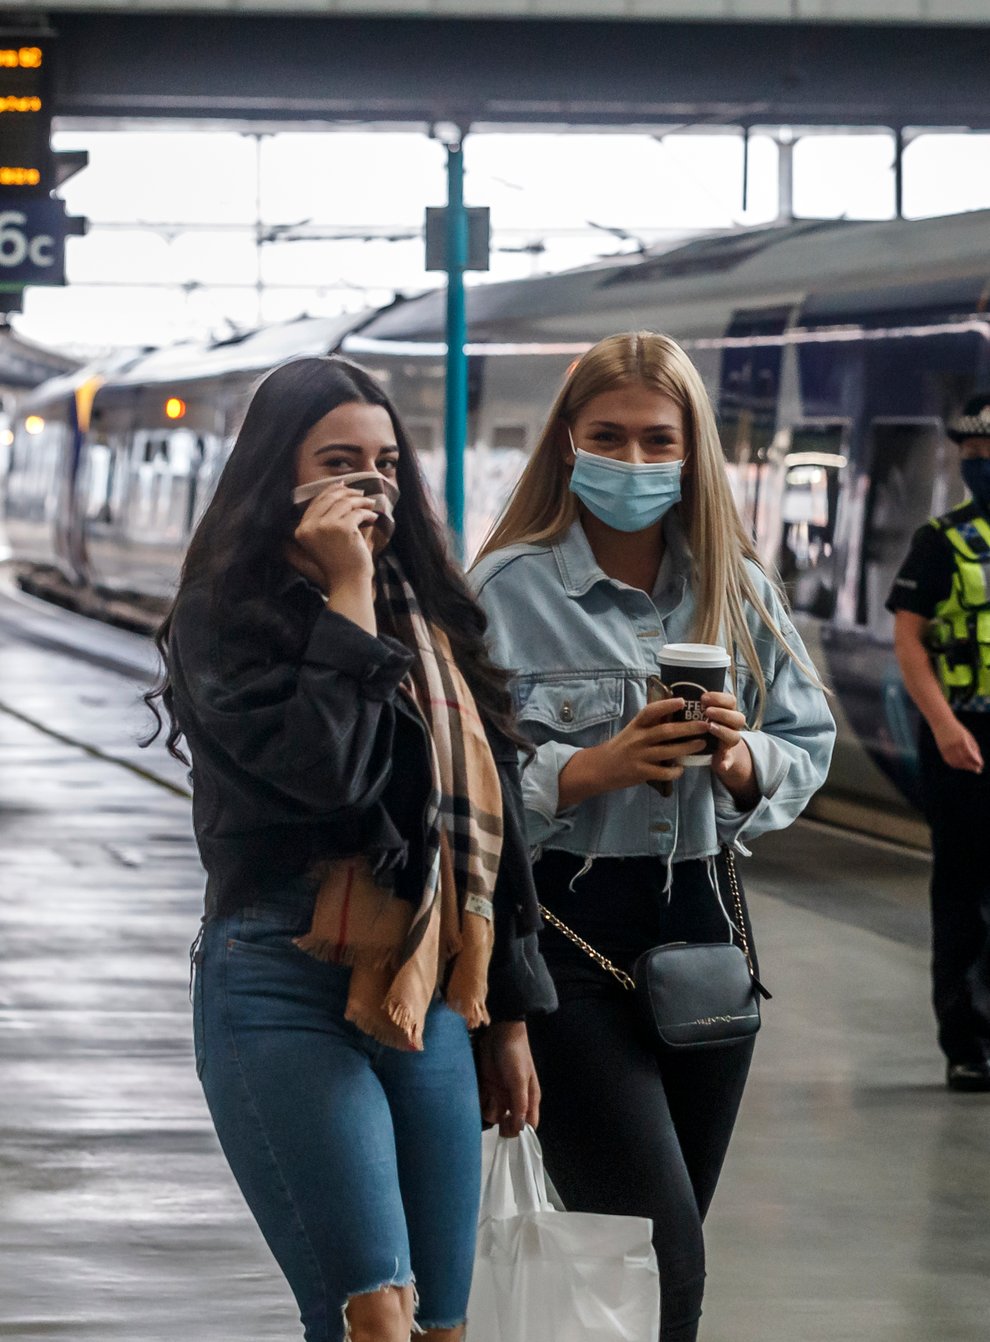 Passengers wearing face masks at Leeds railway station